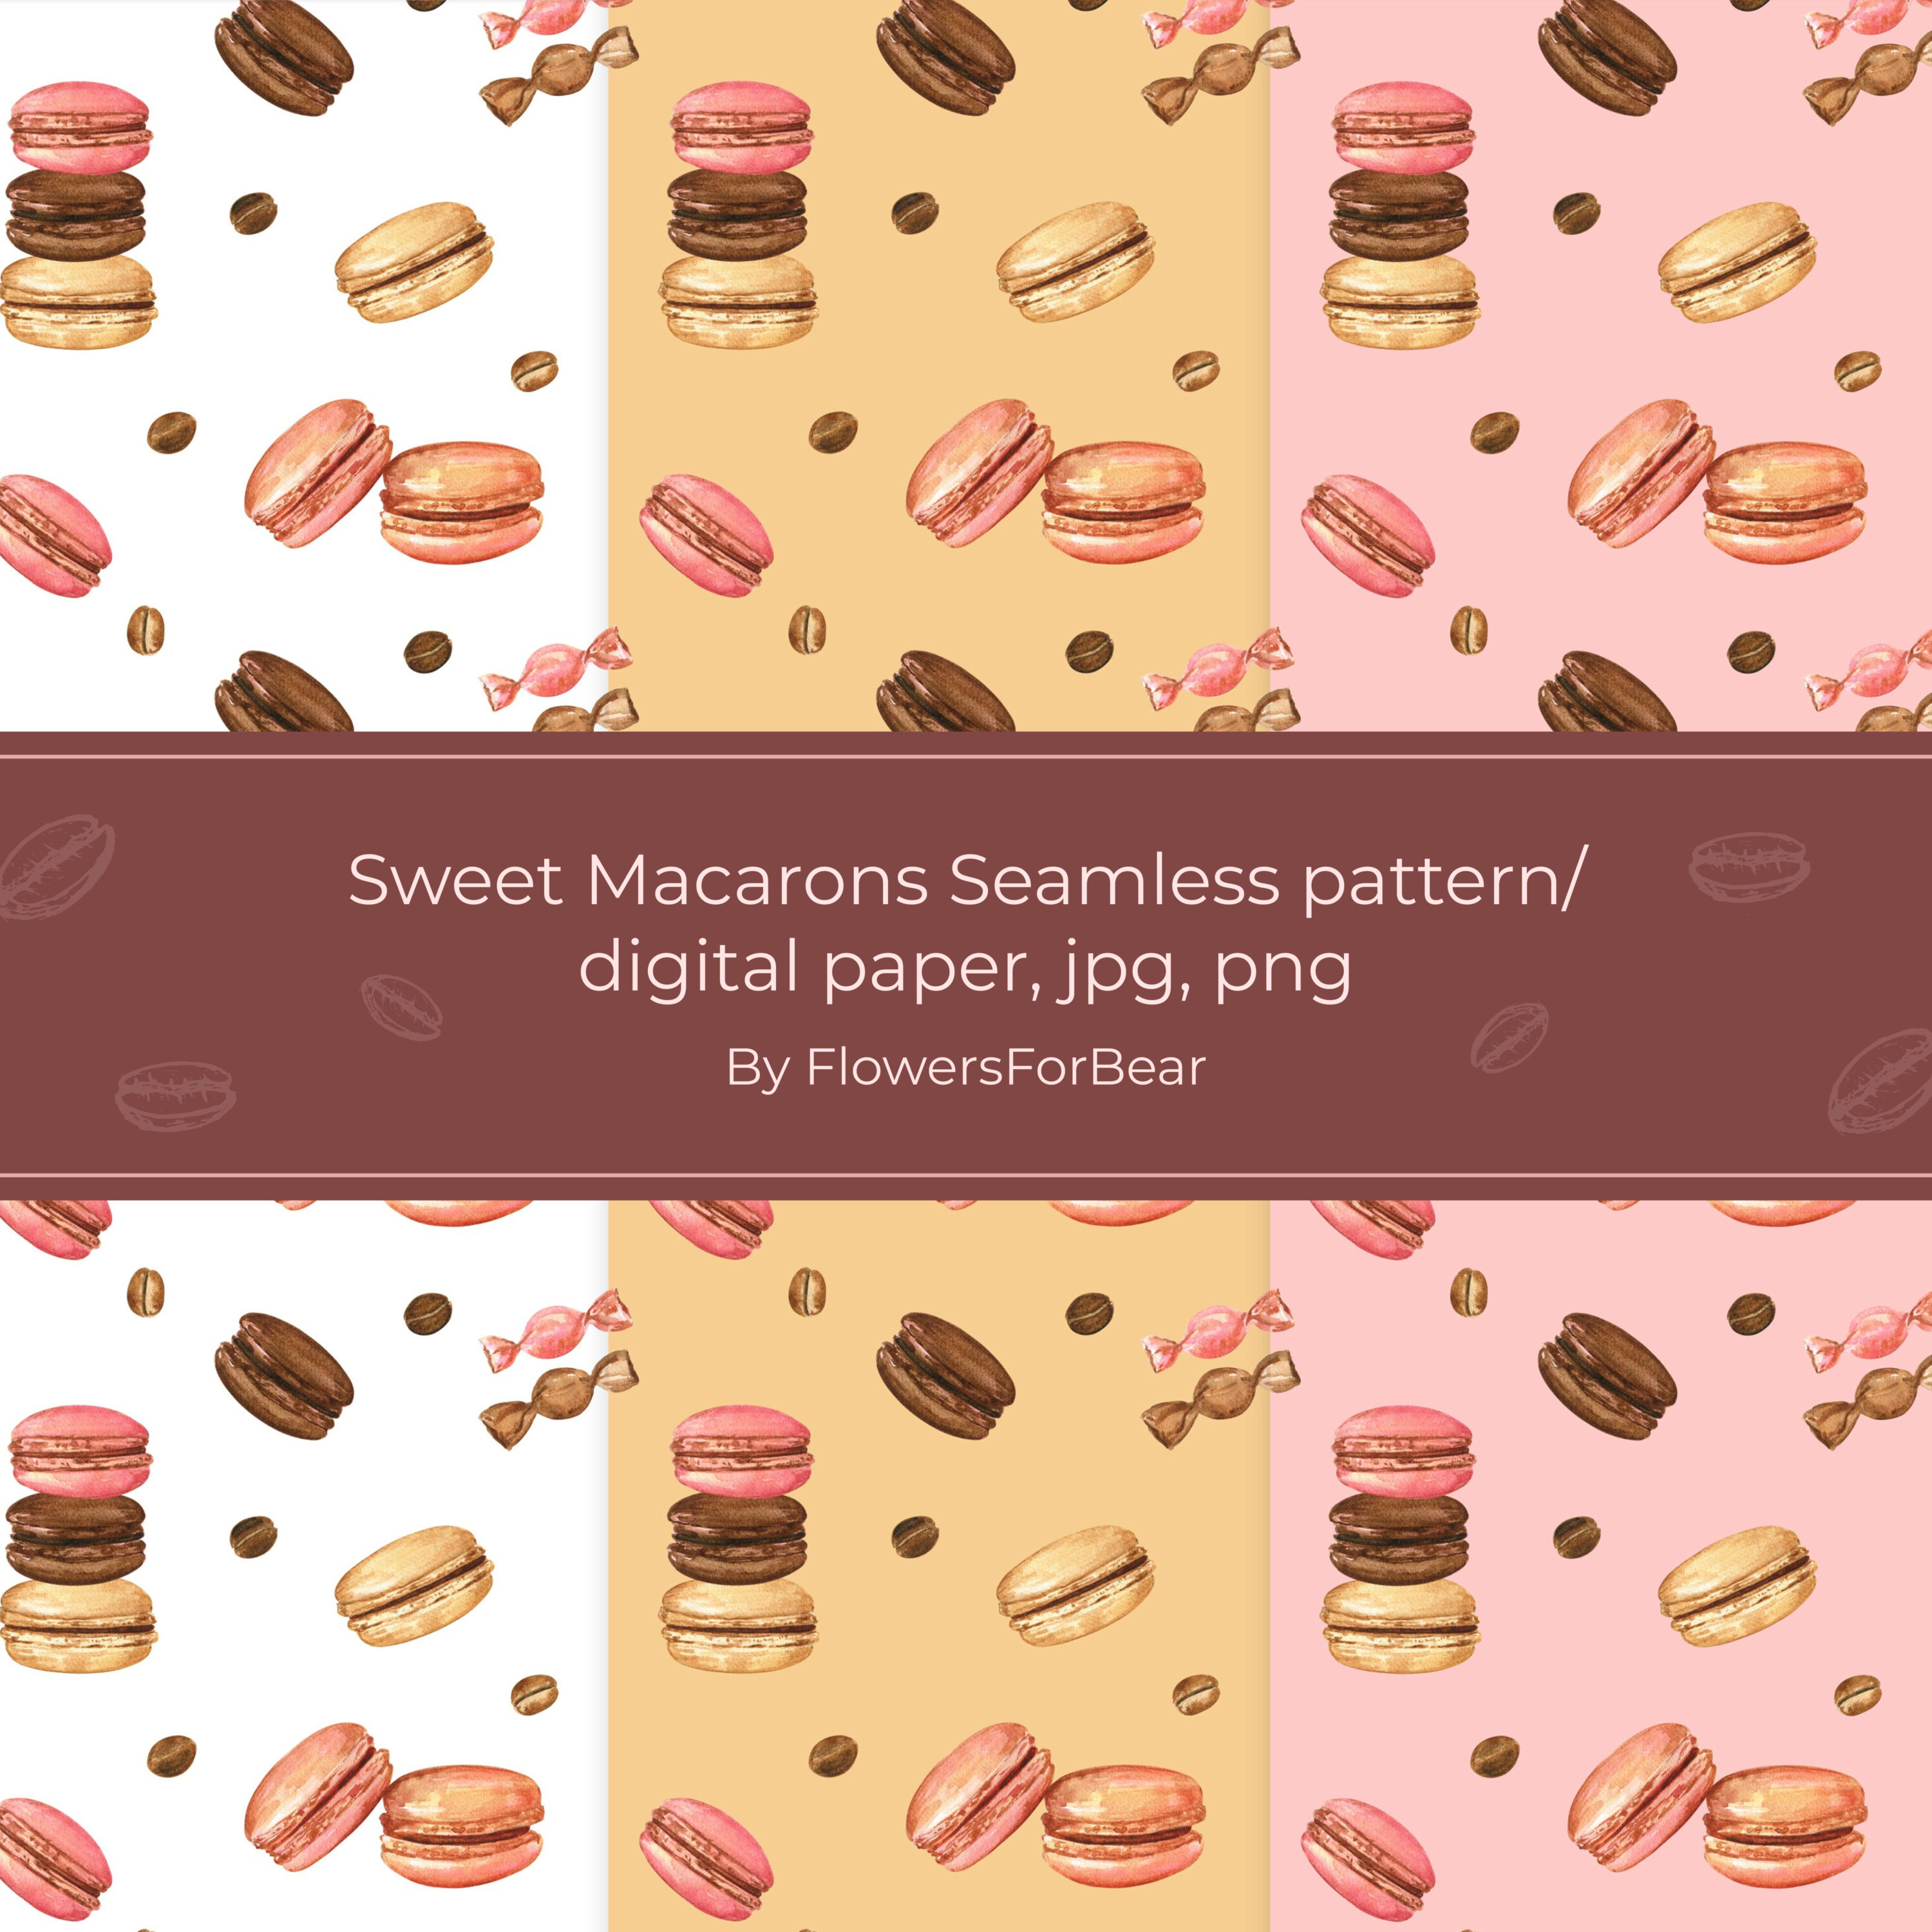 Prints of sweet macarons seamless pattern digital paper.